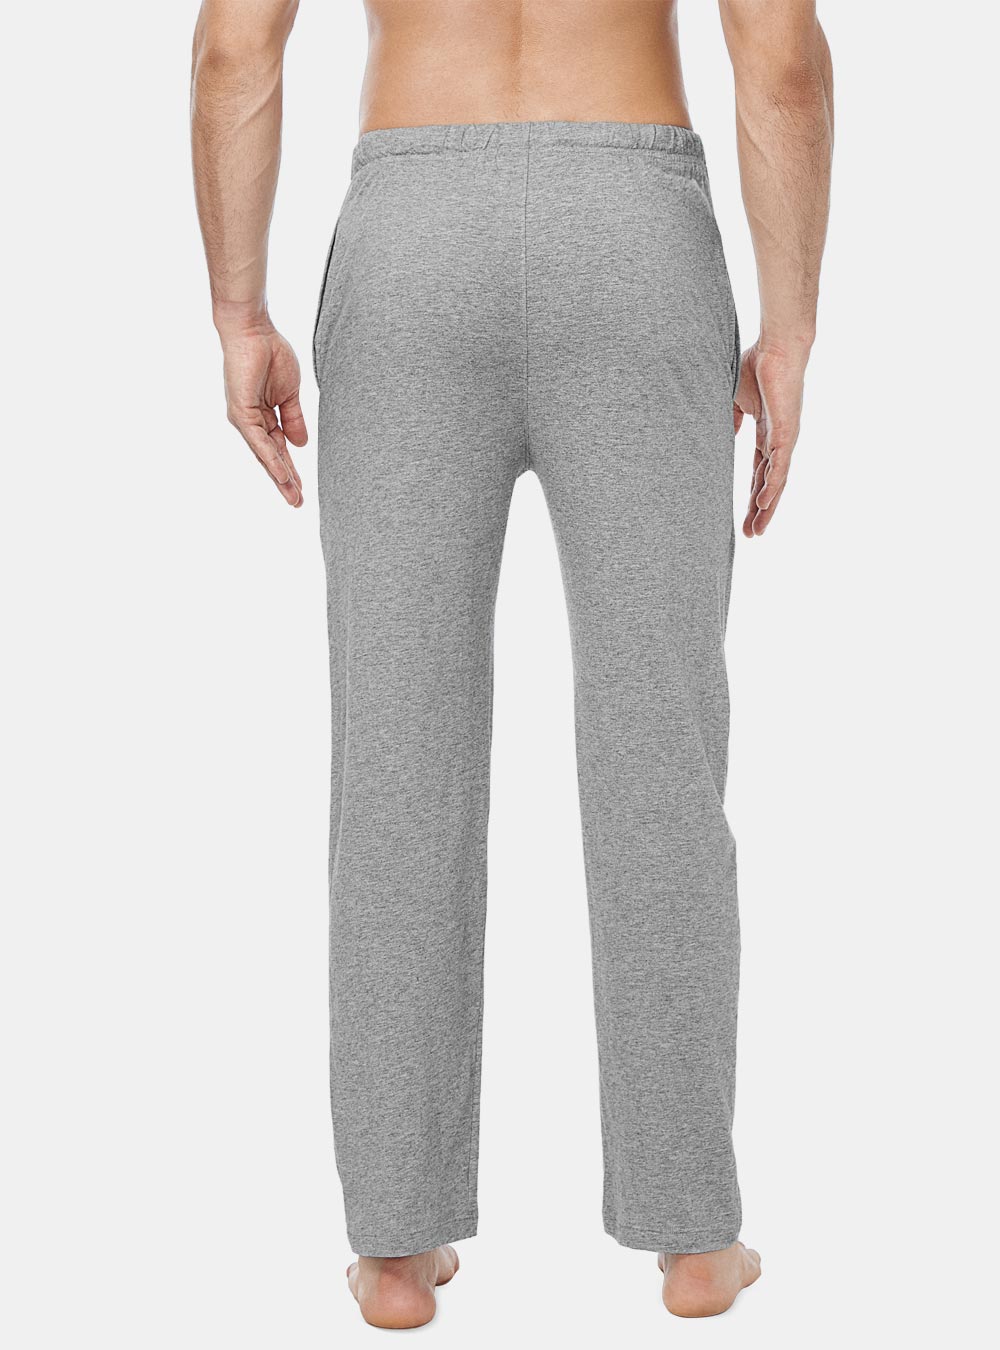 2 Mens Pyjama Bottoms 100% Cotton Woven Check Lounge Pant pj